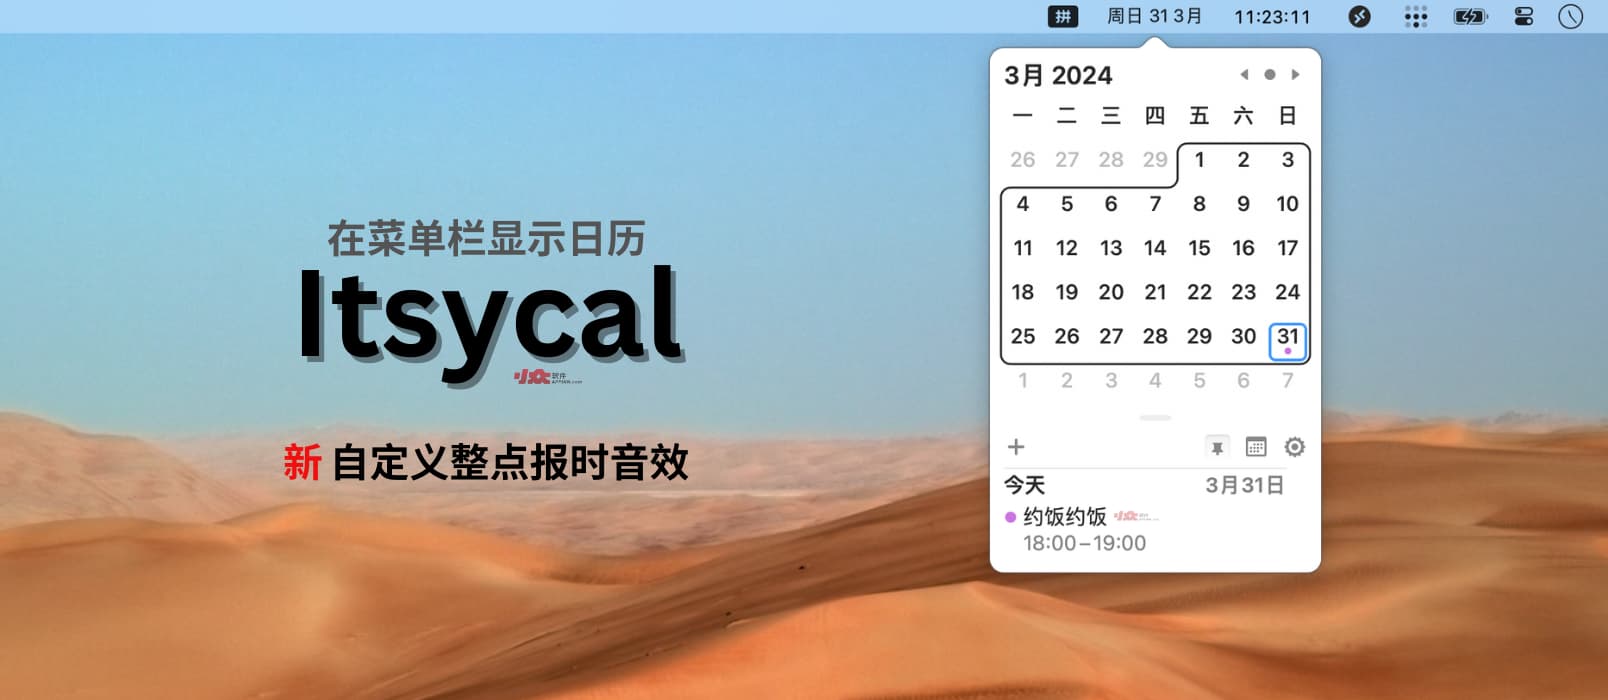 Itsycal - 在 Mac 菜单栏显示迷你日历：新增自定义整点报时音效功能